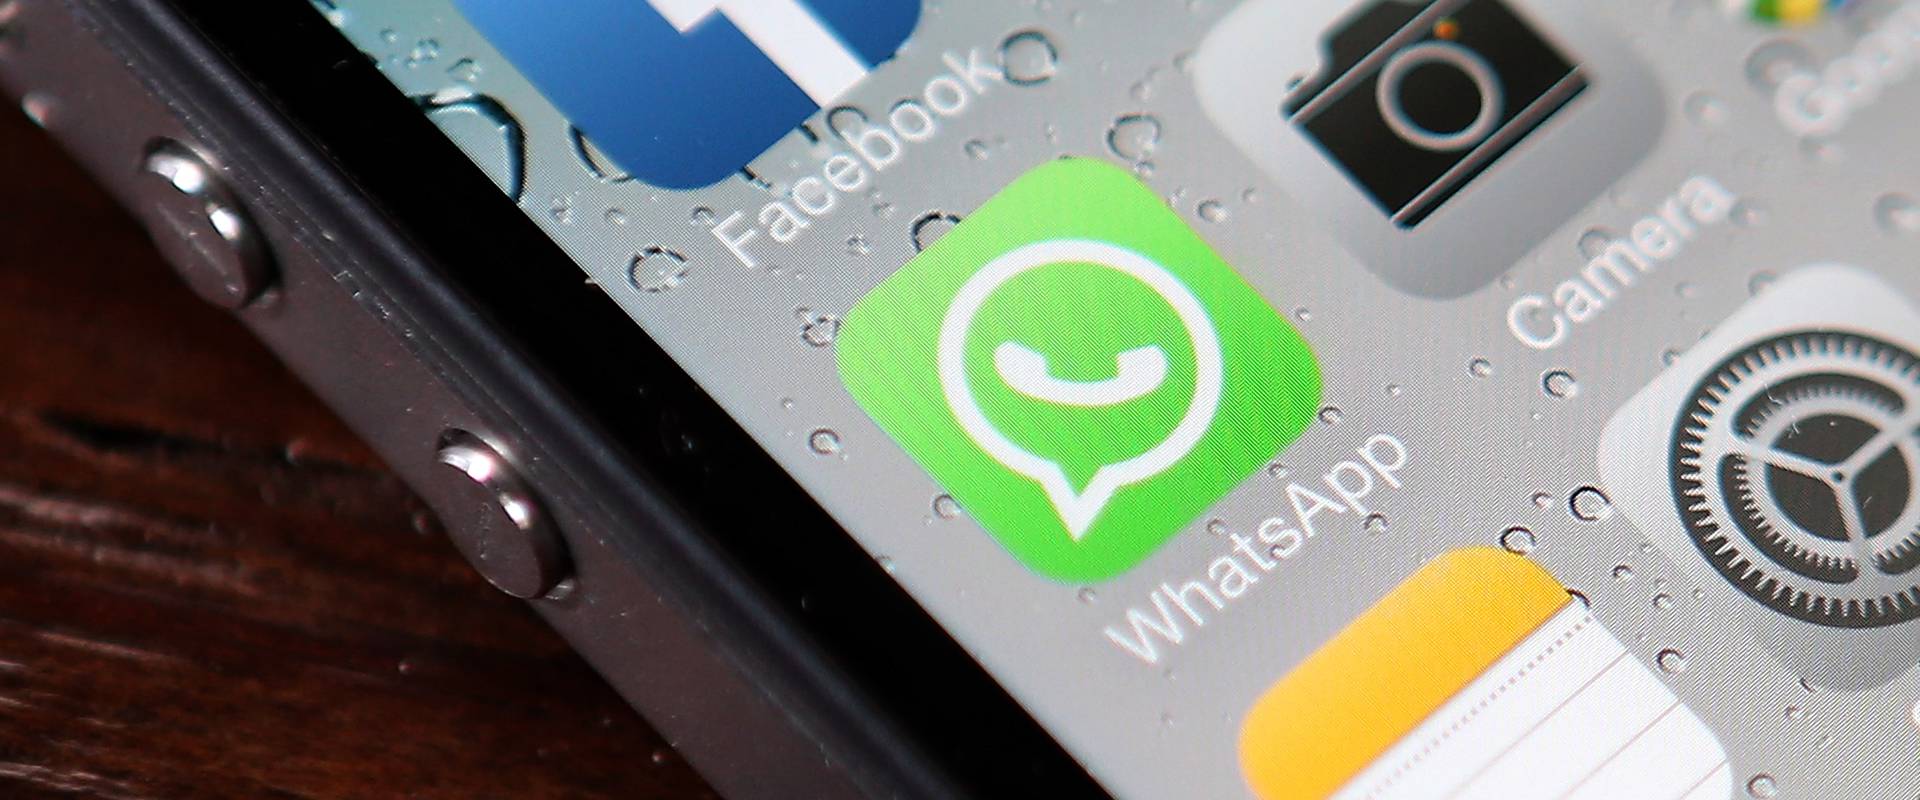 WhatsApp za iOS sad omogućava video u pozadini razgovora